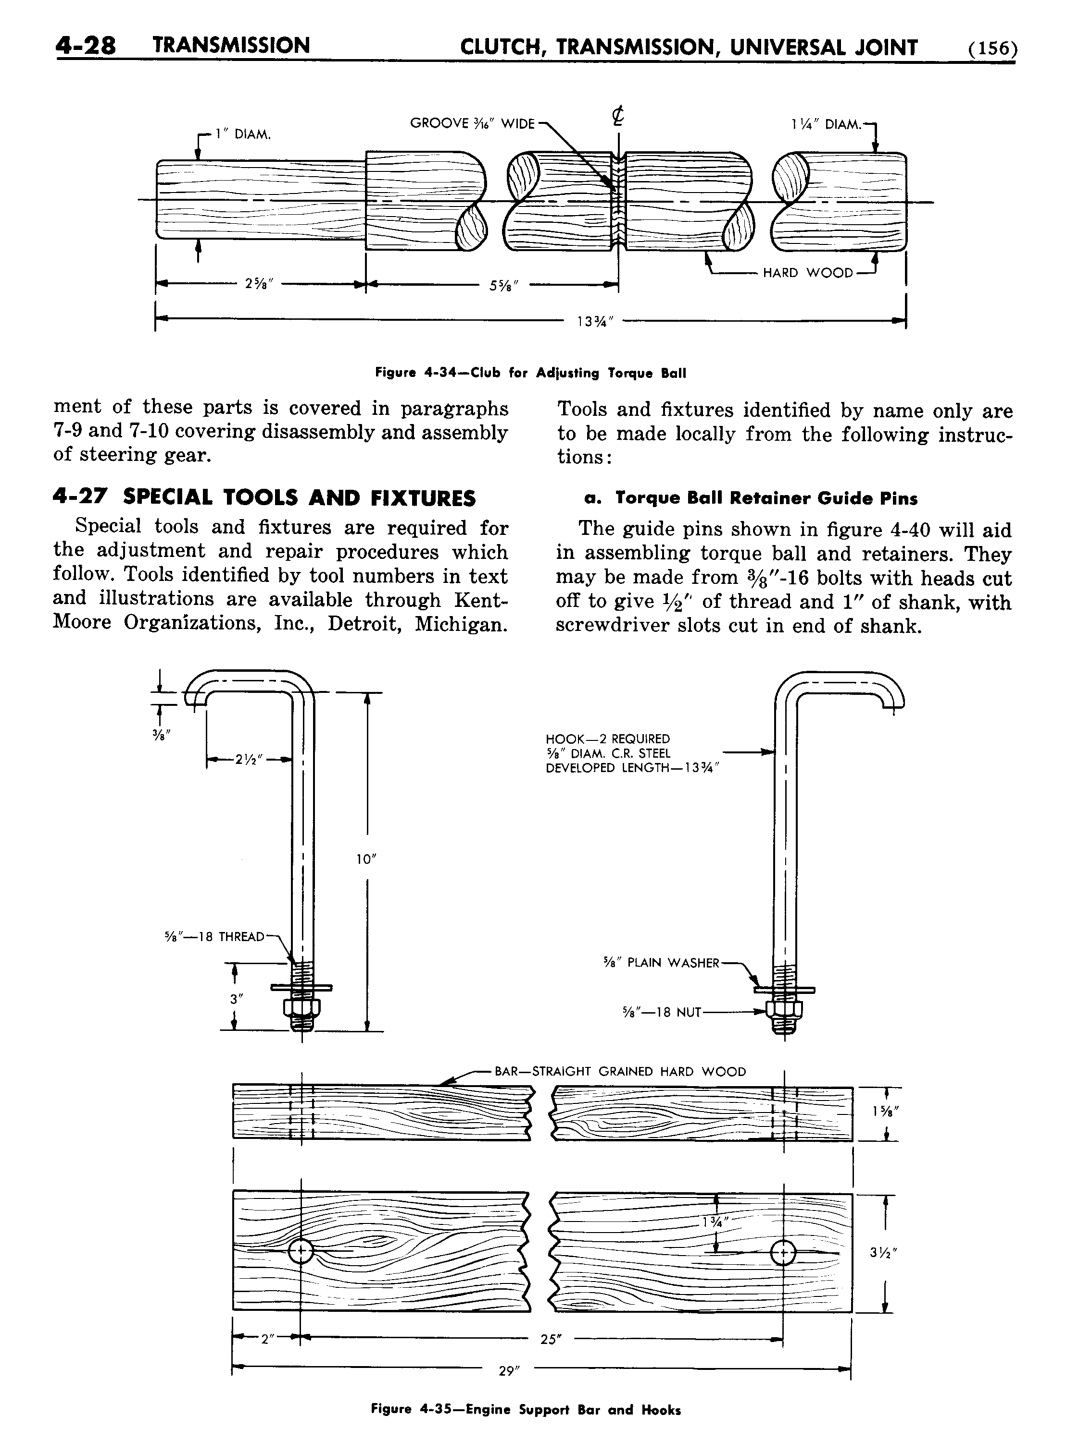 n_05 1948 Buick Shop Manual - Transmission-028-028.jpg